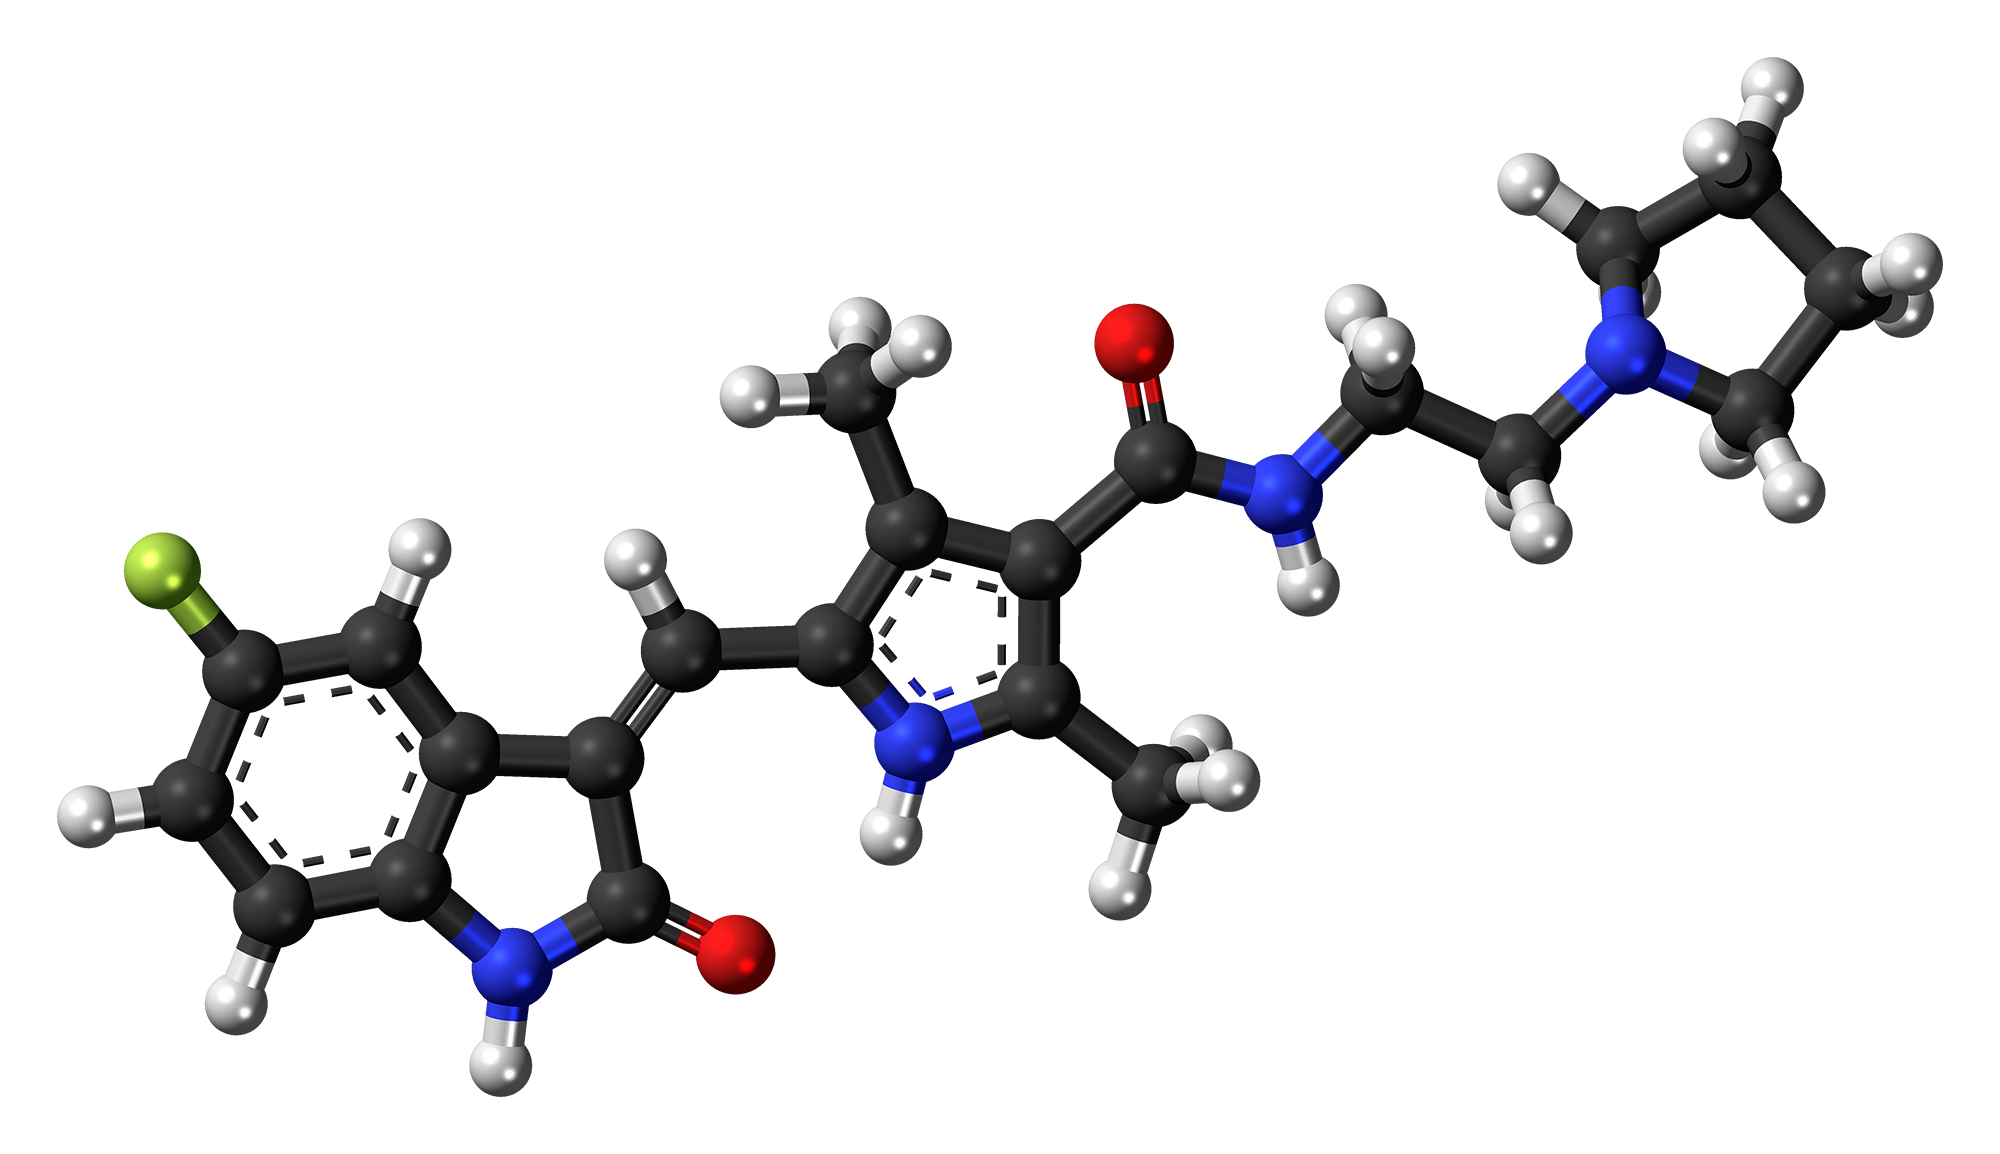 Ball-and-stick model of the toceranib molecule